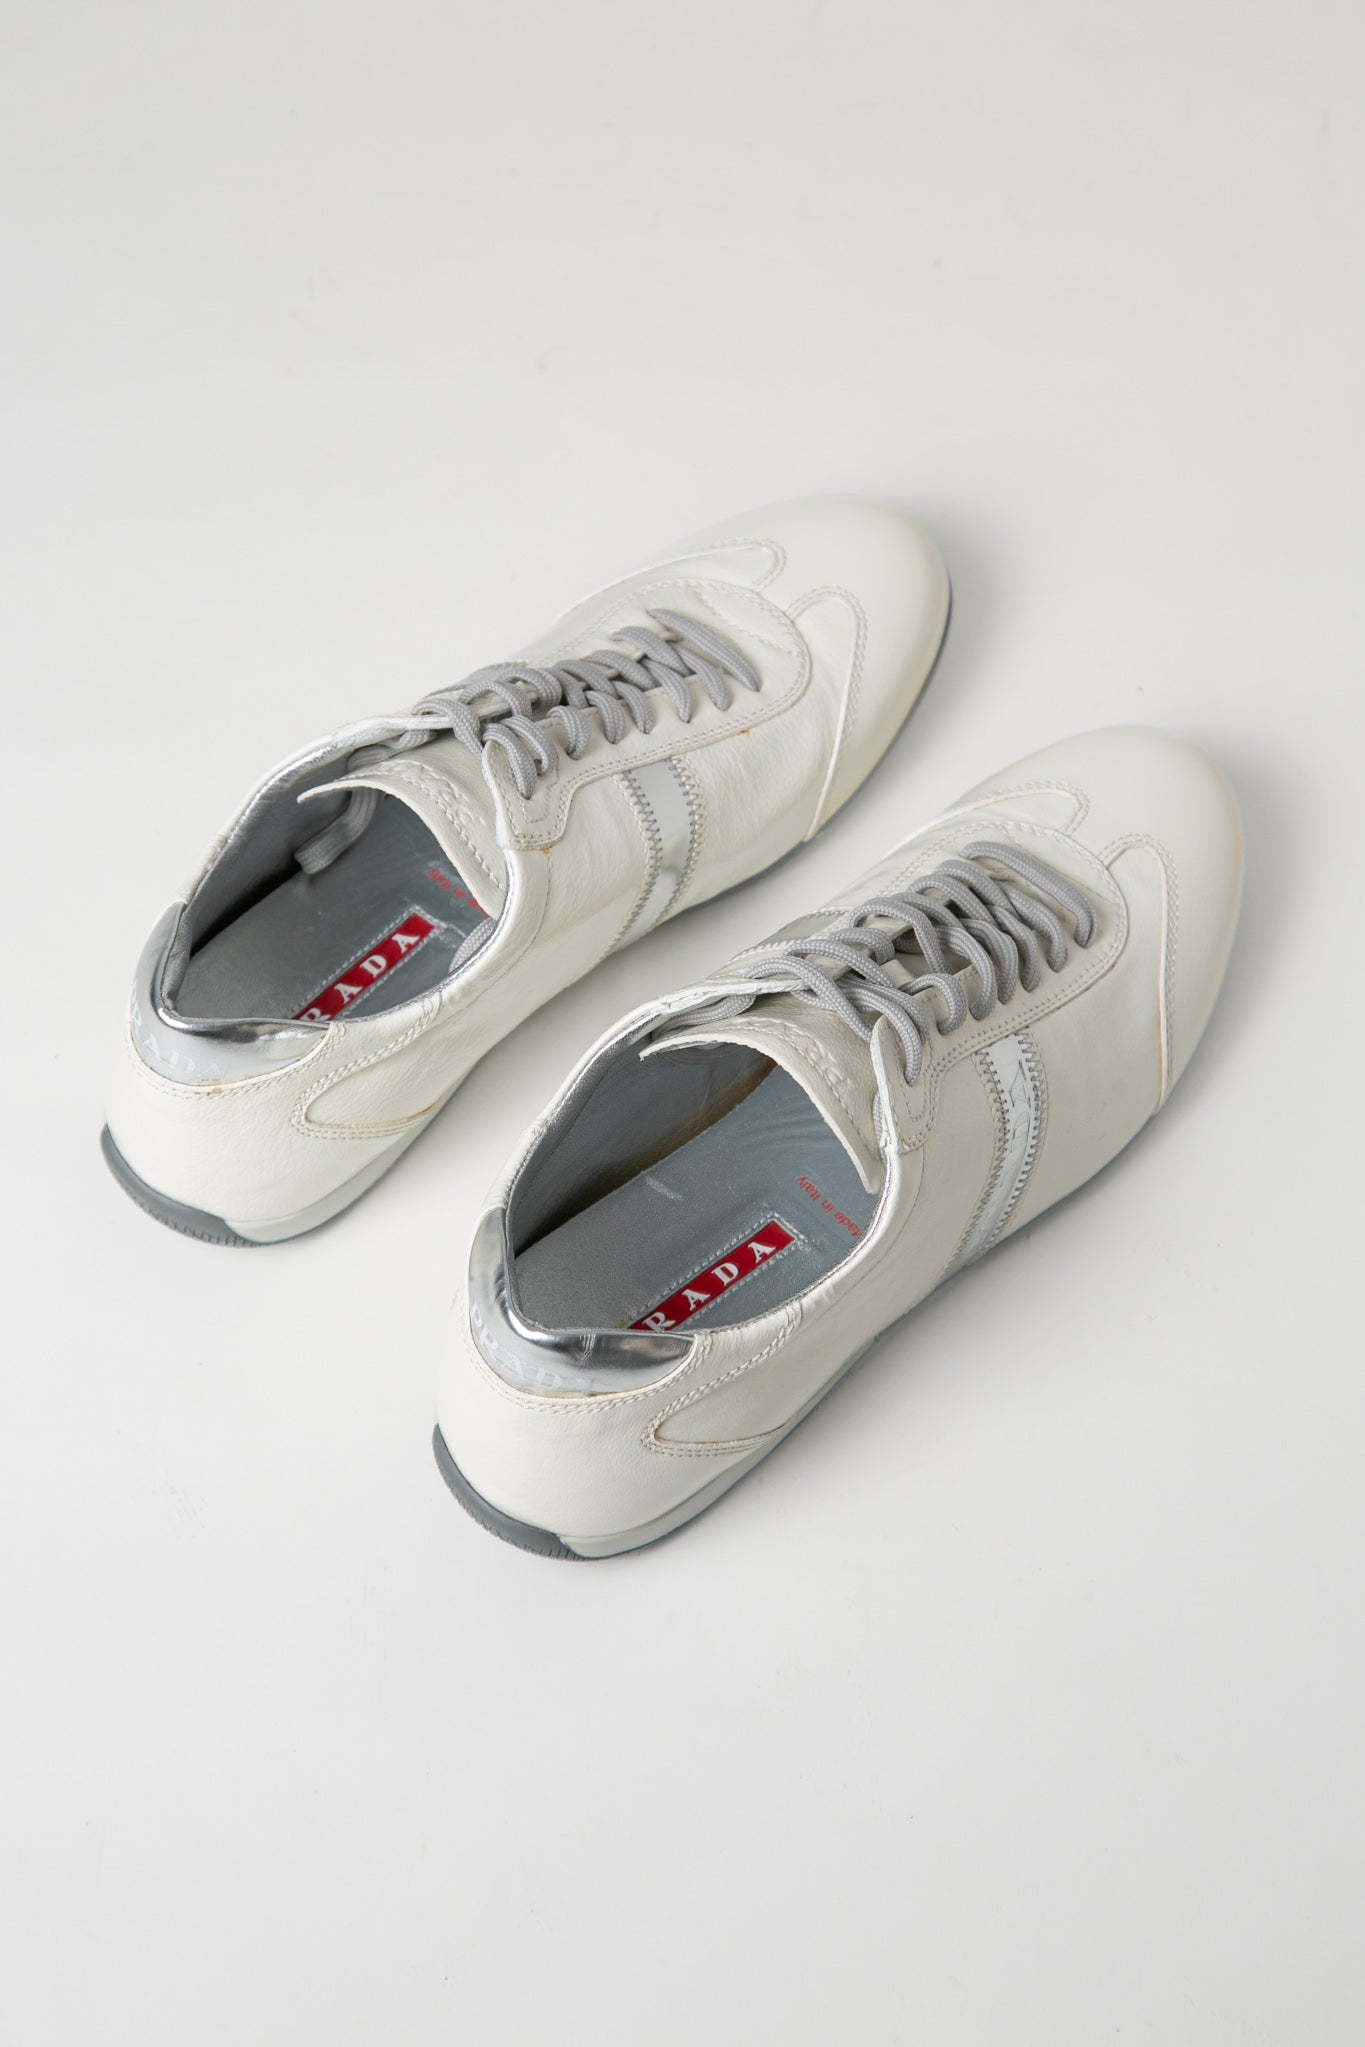 Prada White Silver Sneakers